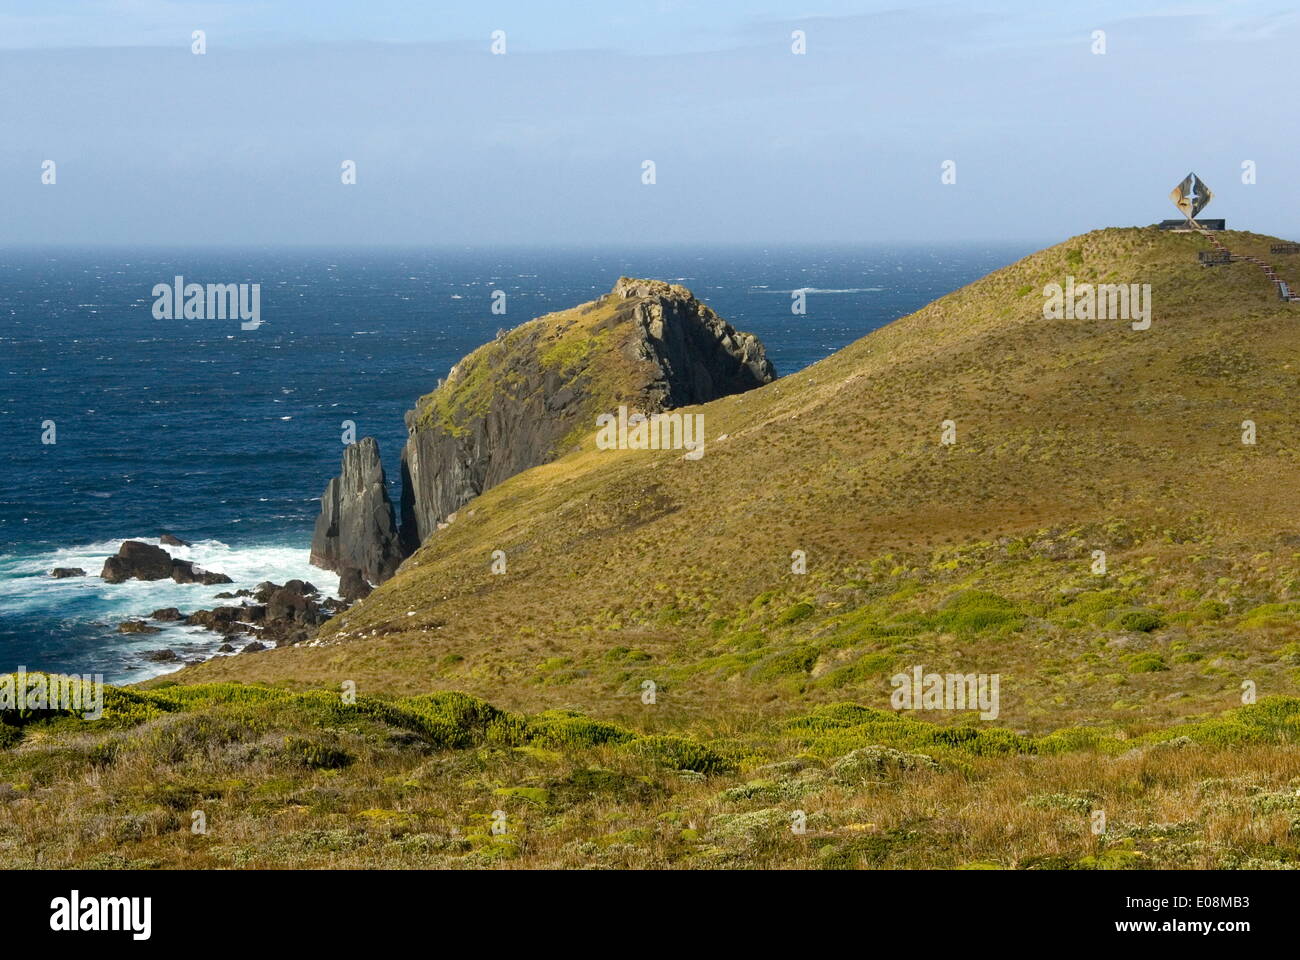 The Albatross Monument at Cape Horn, Isla de Cabo de Hornos, Tierra del Fuego, Chile, South America Stock Photo